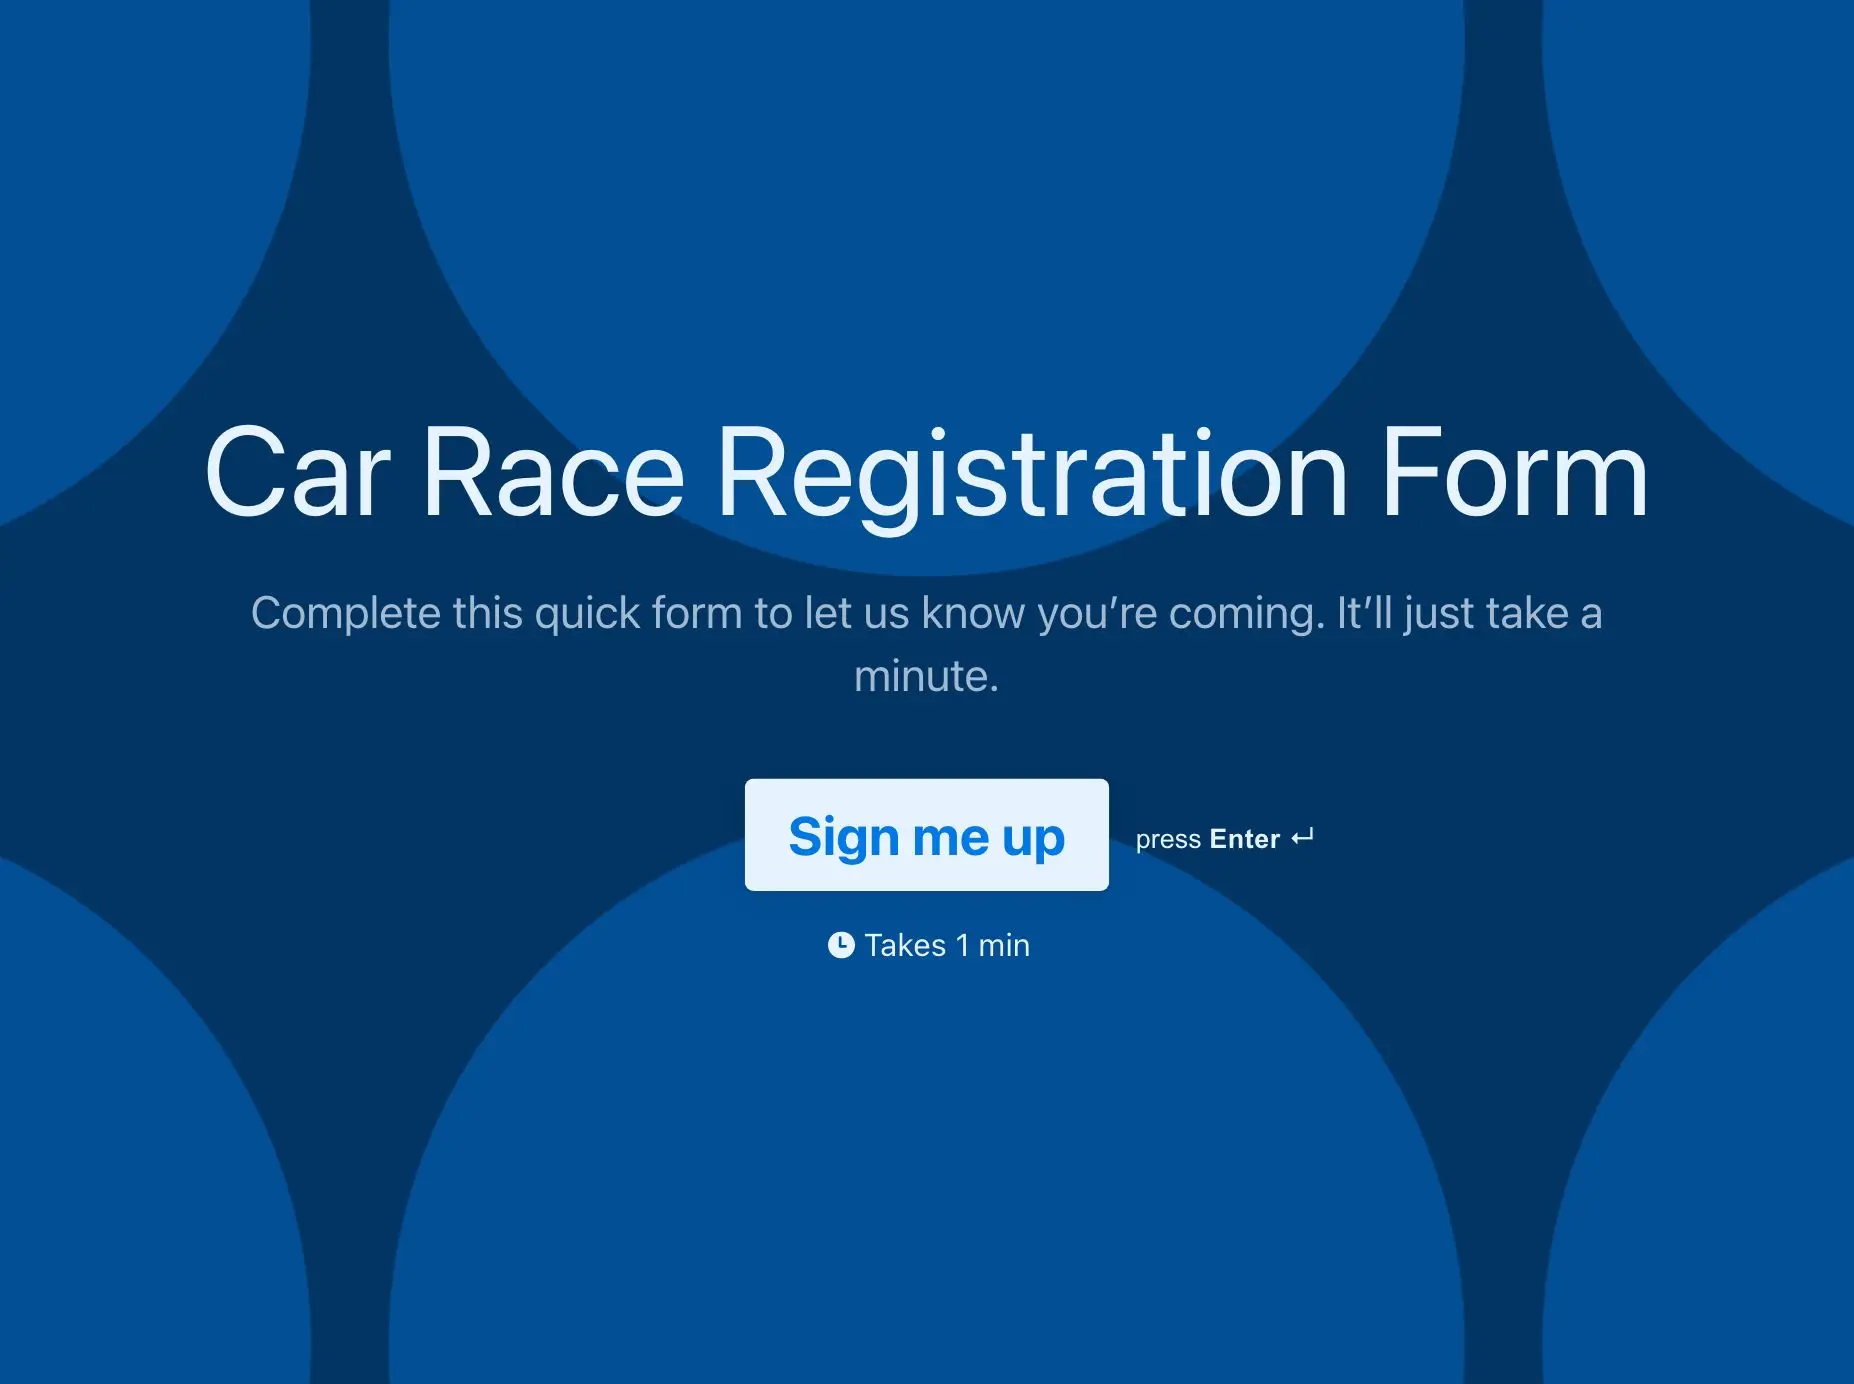 Car Race Registration Form Template Hero